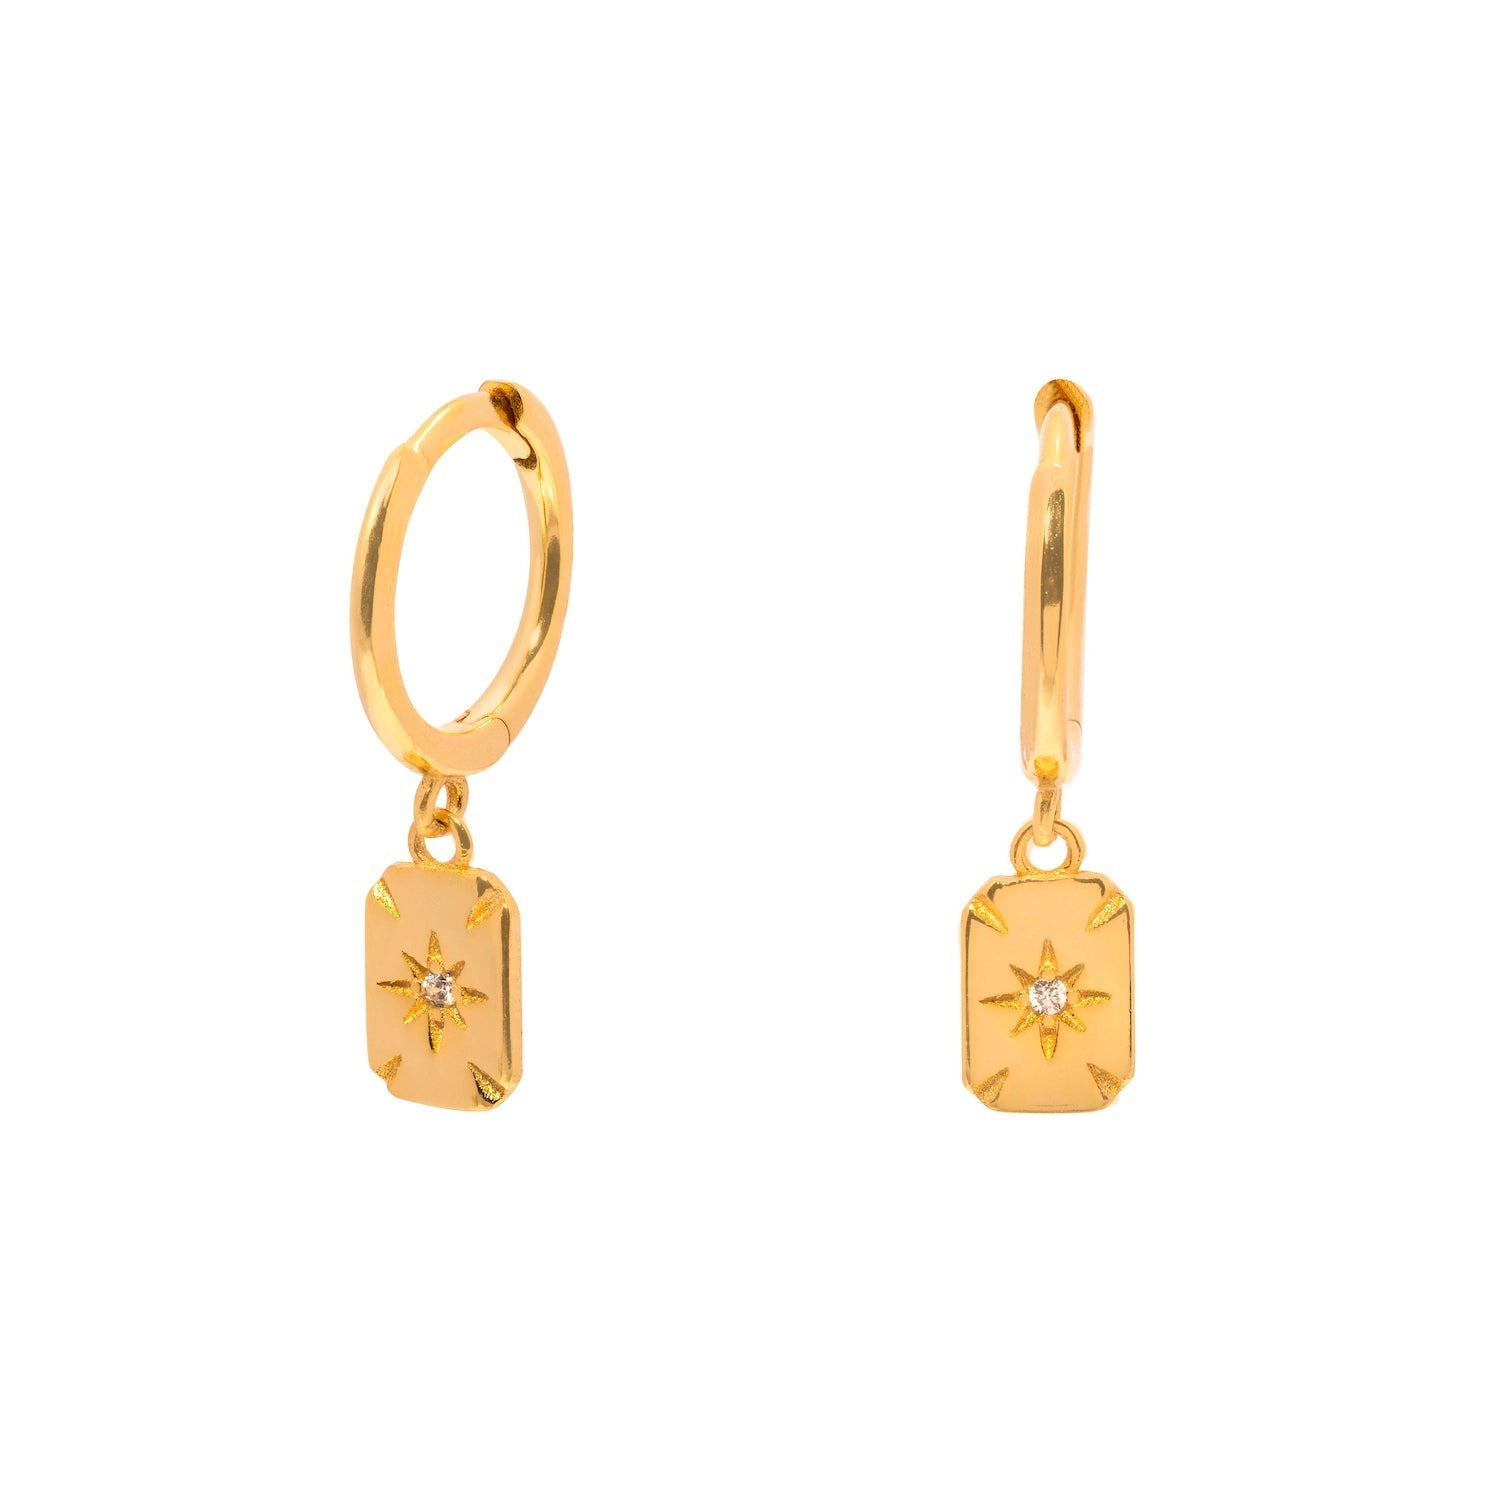 duo-jewellery-earrings-yellow-gold-plate-with-star-hoop-earrings-41380403937531